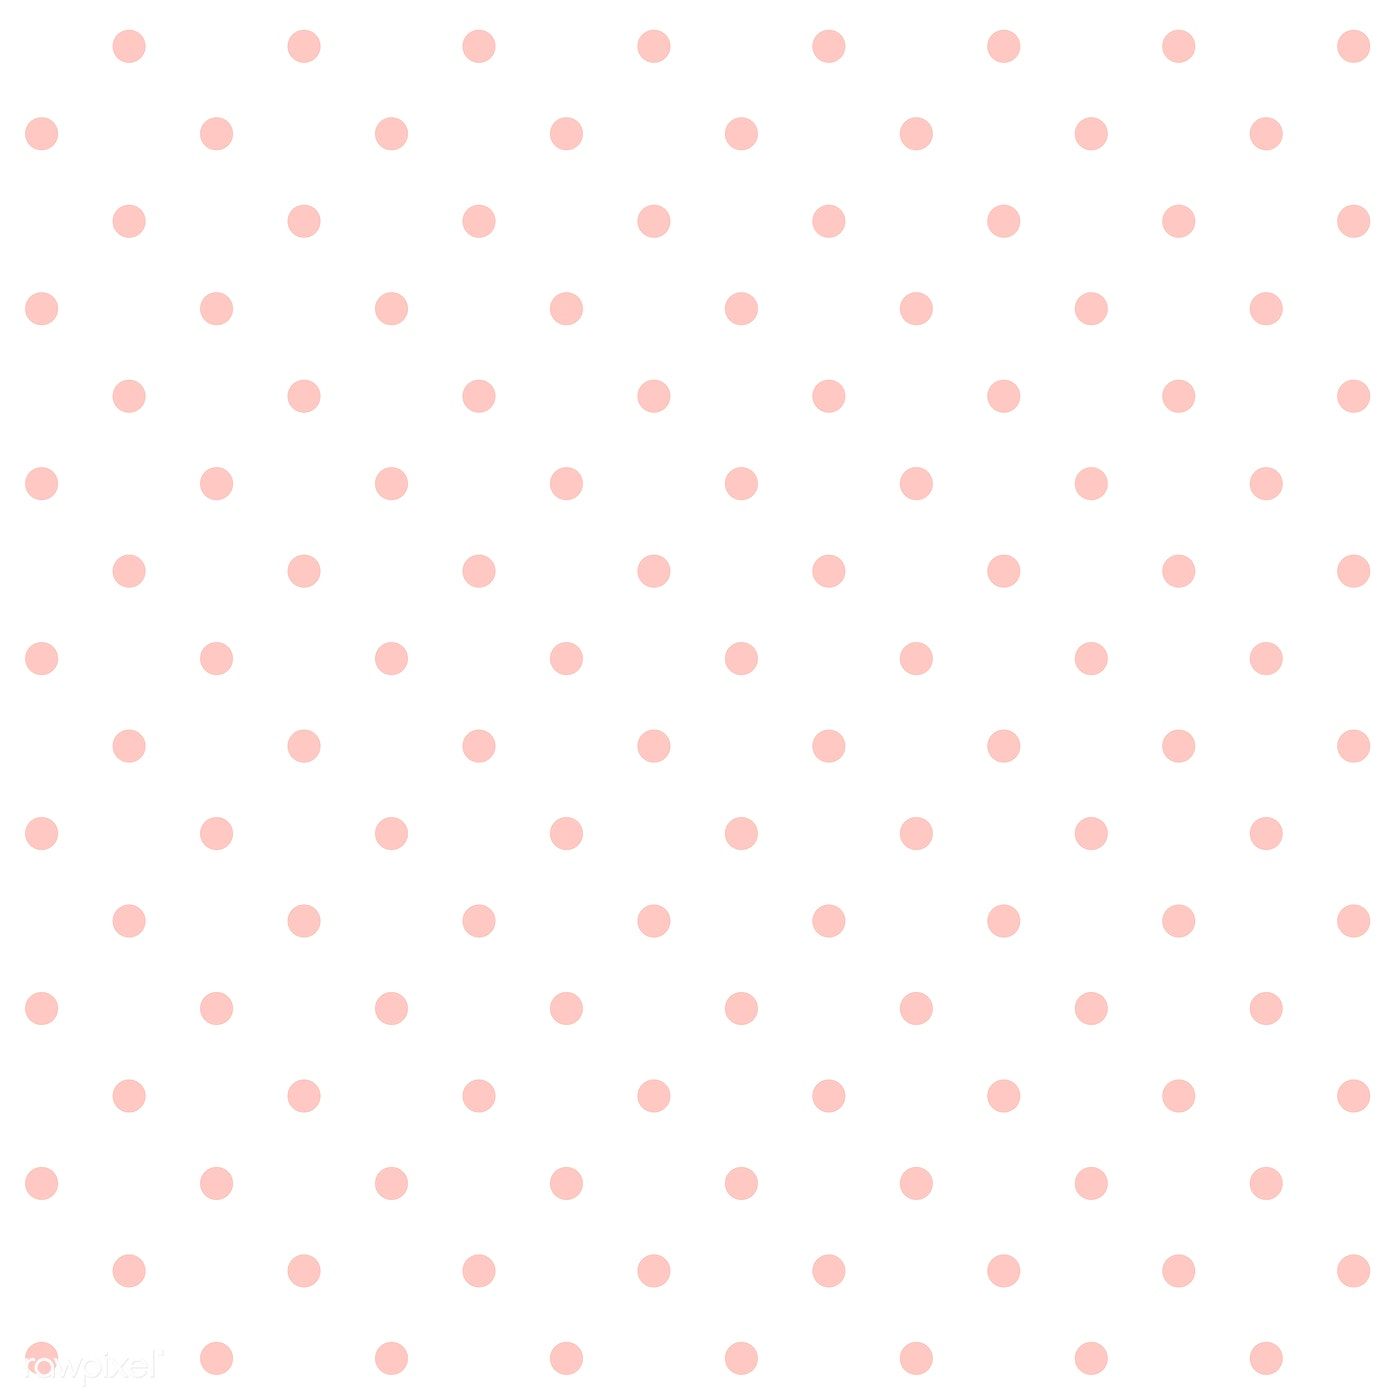 Pastel pink and white seamless polka dot pattern vector. free image by rawpixel.com. Polka dots wallpaper, Pink polka dots background, Pink polka dots wallpaper